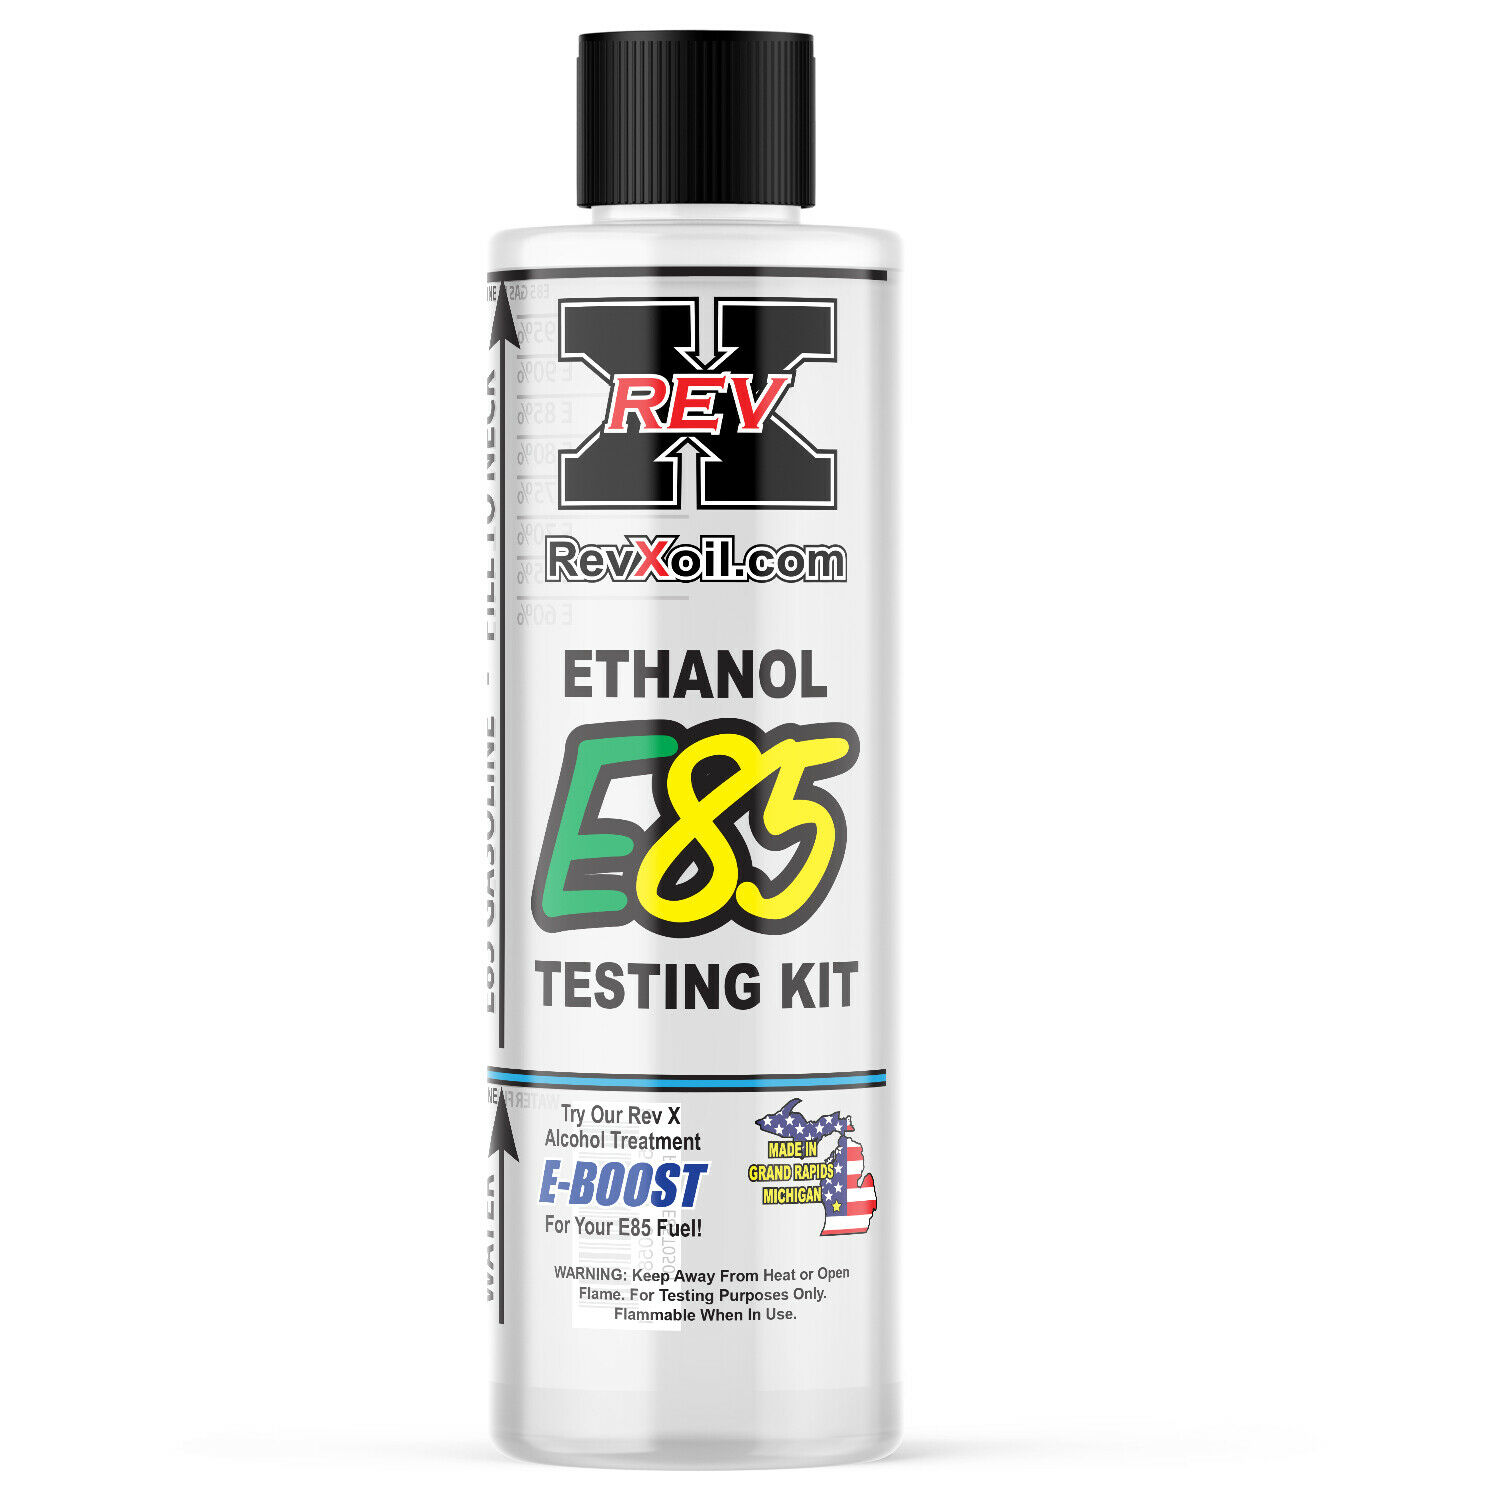 Rev X E85t0501 E85 Gasoline Tester - Easy To Use Ethanol Test Kit For Flex Fuel